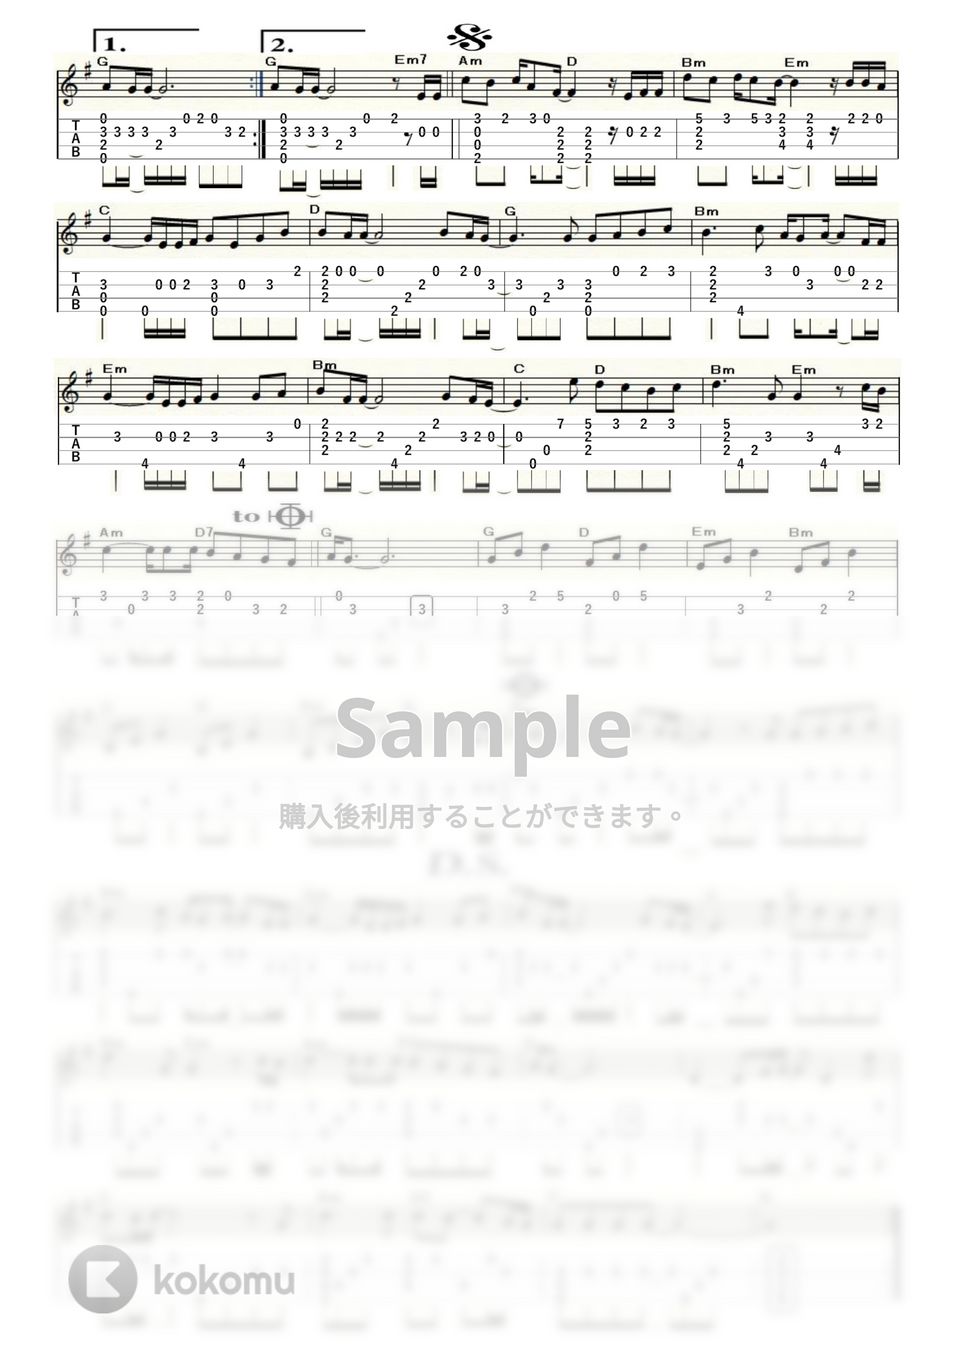 Kiroro - 未来へ (ｳｸﾚﾚｿﾛ / Low-G / 中級) by ukulelepapa